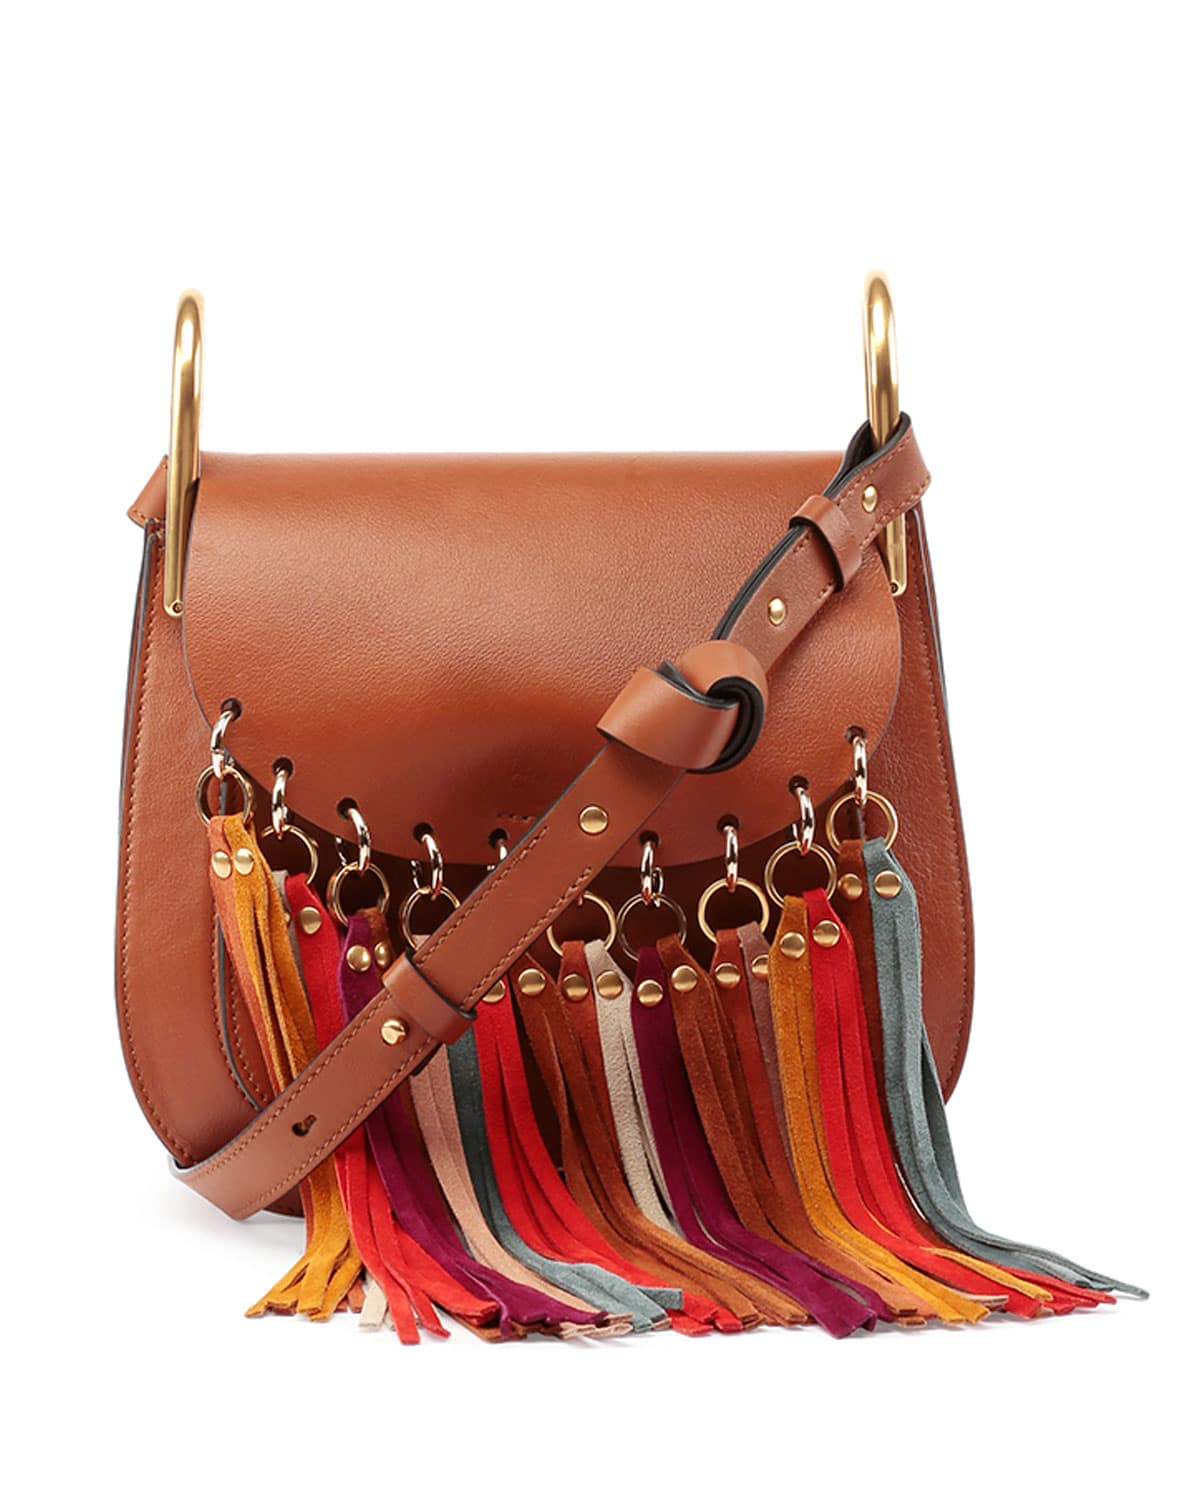 handbags chloe - Chloe Spring/Summer 2016 Bag Collection | Spotted Fashion